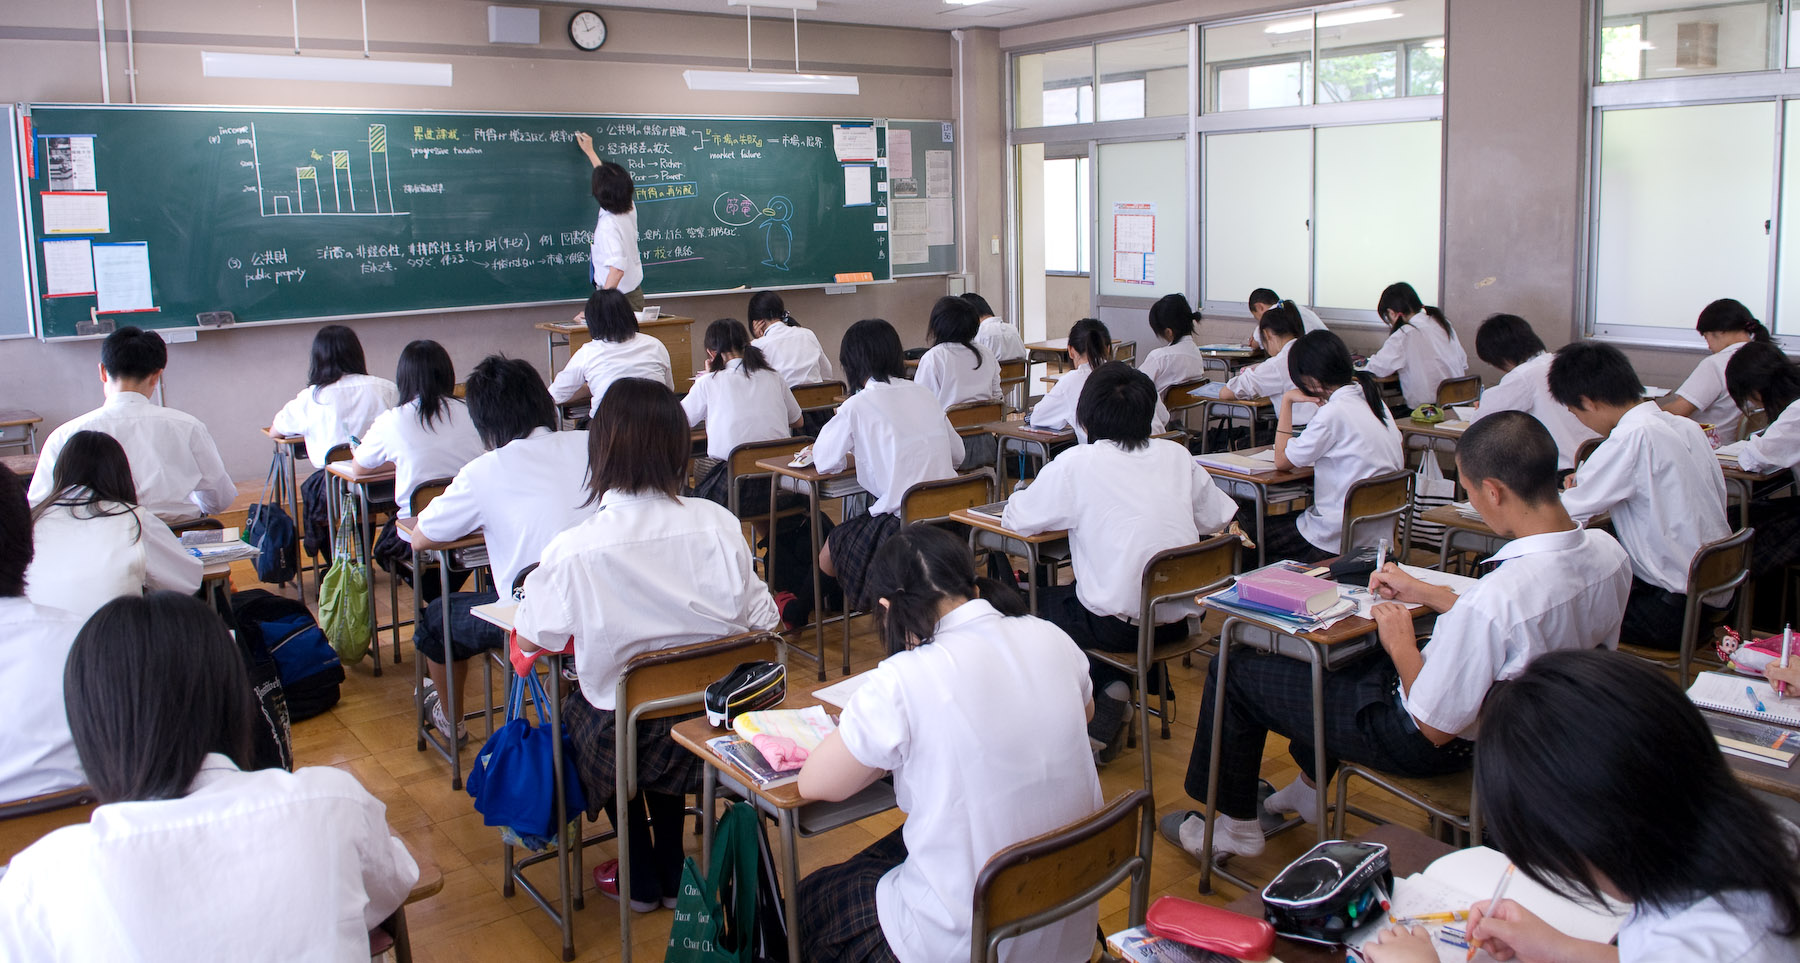 Japanese High School Classroom.